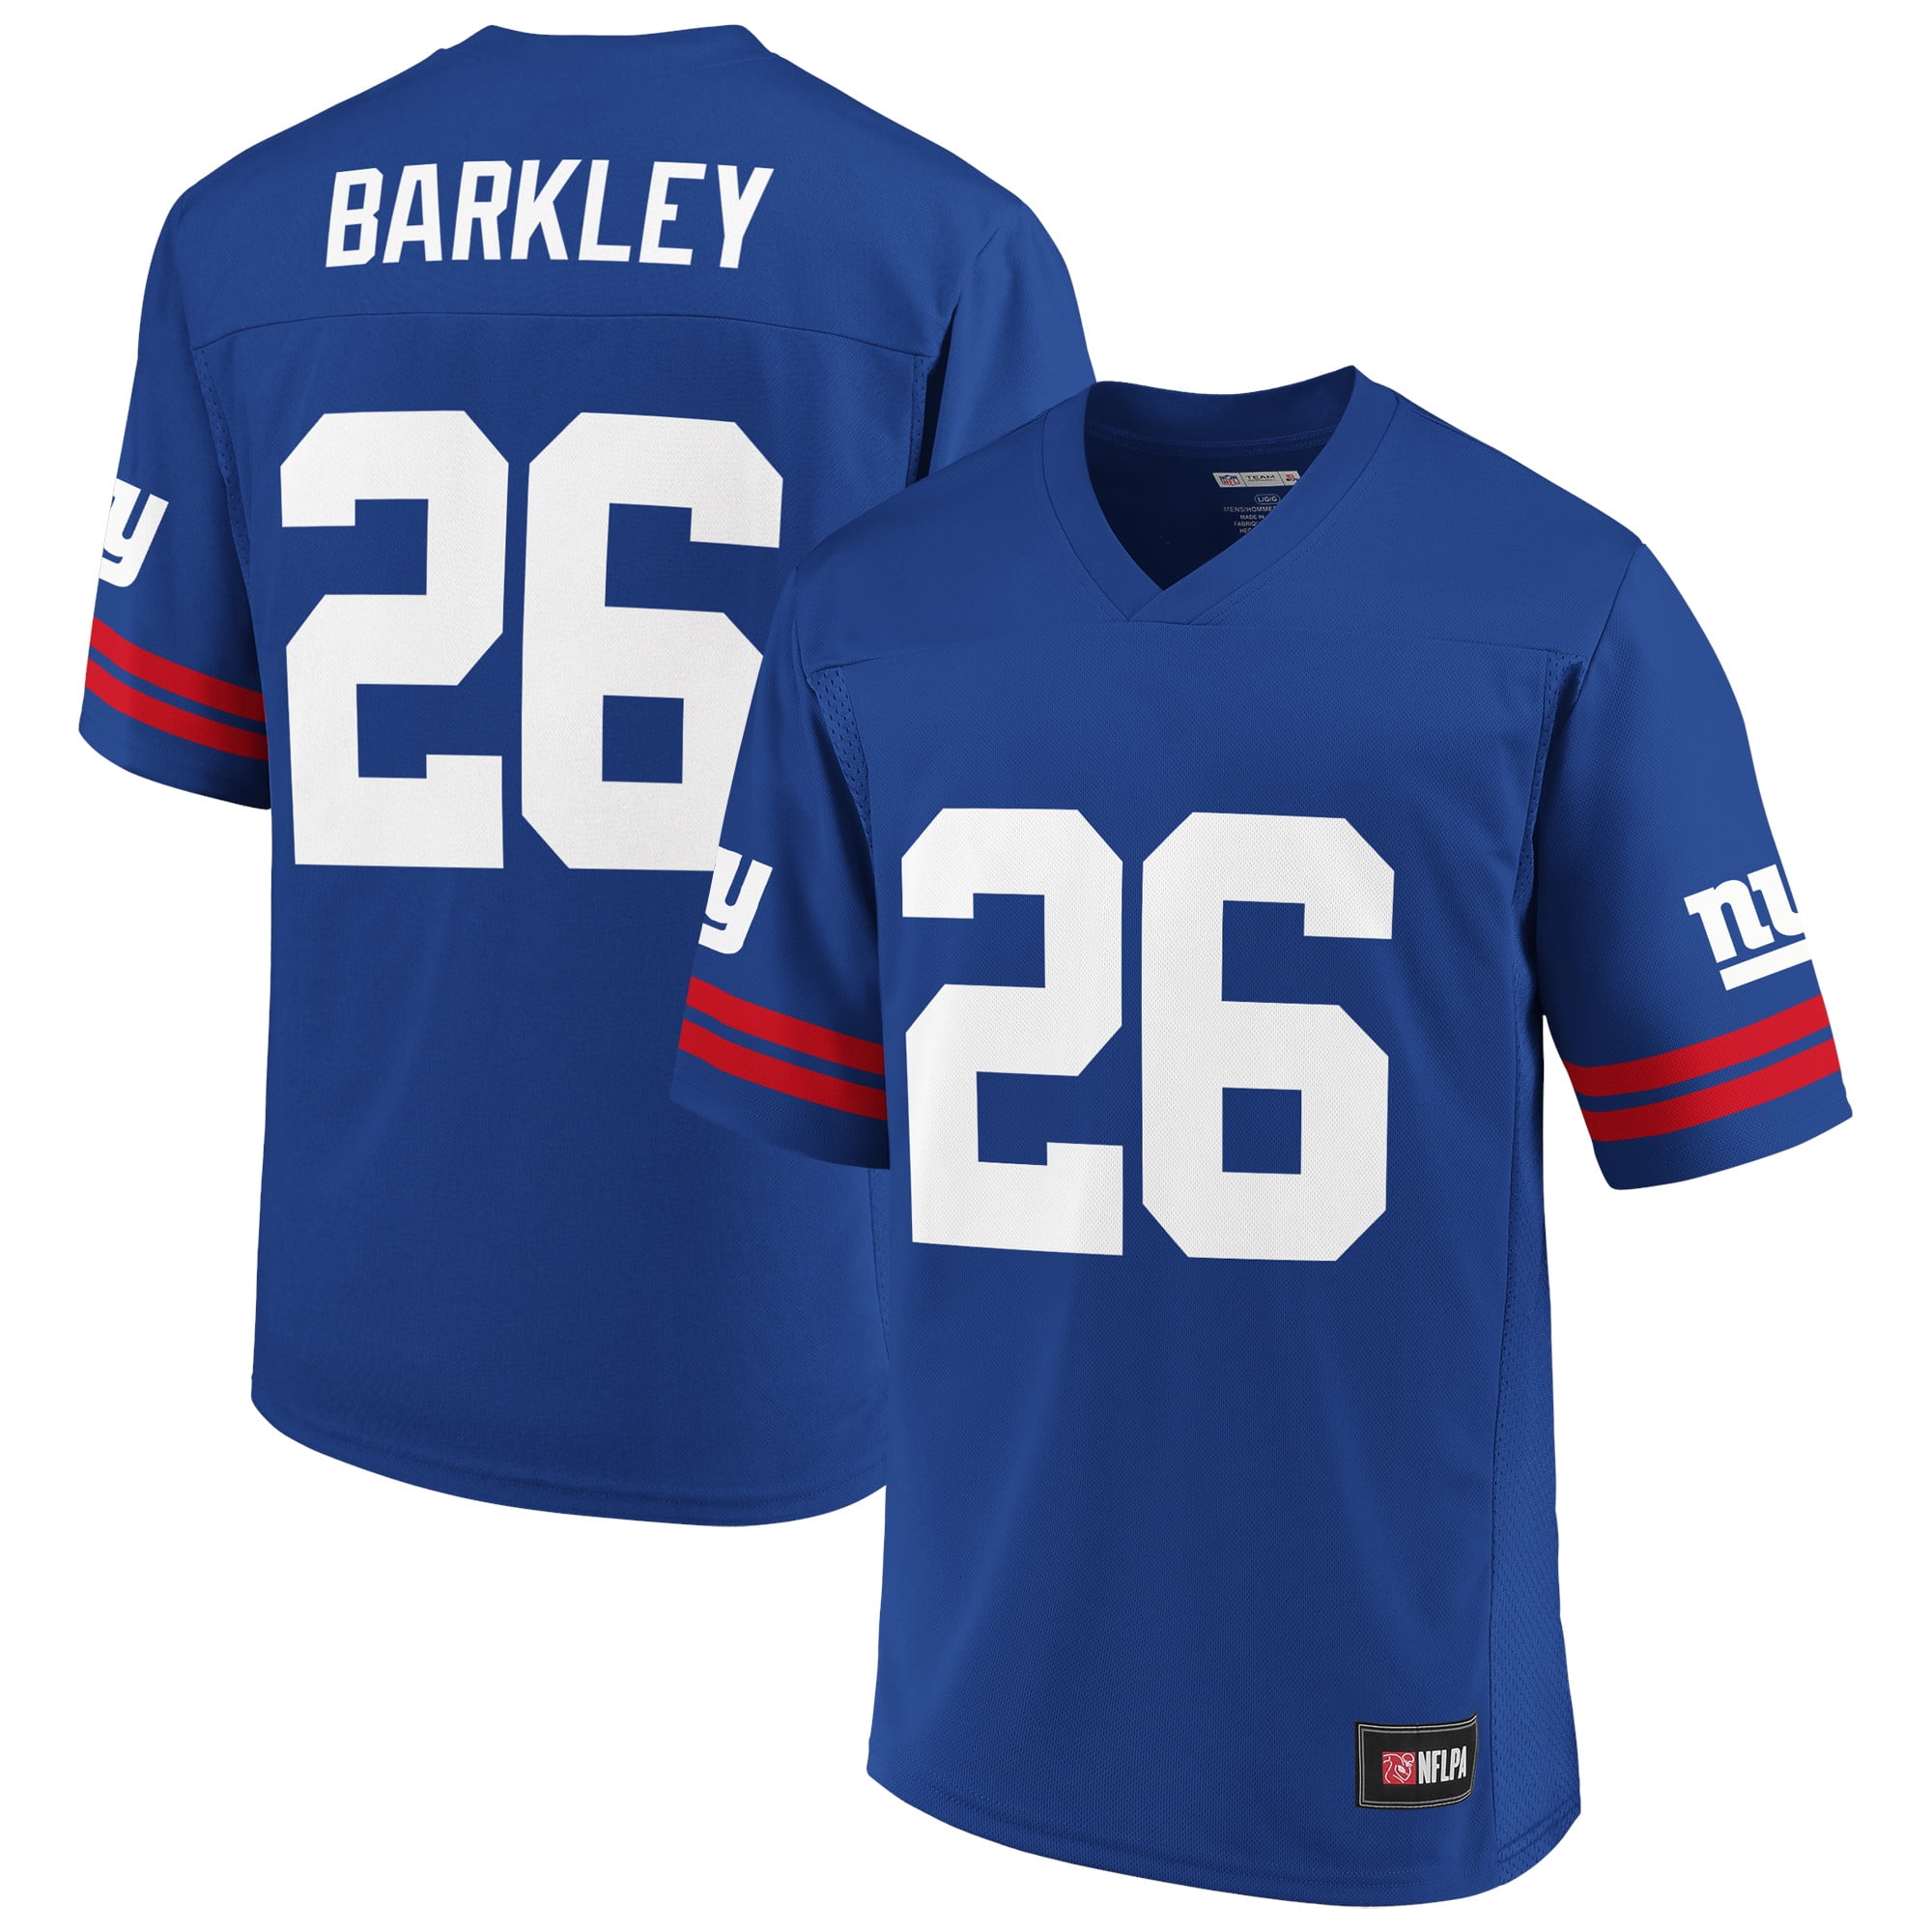 Nike NFL New York Giants (Saquon Barkley) Men's Game Football Jersey - Blue S